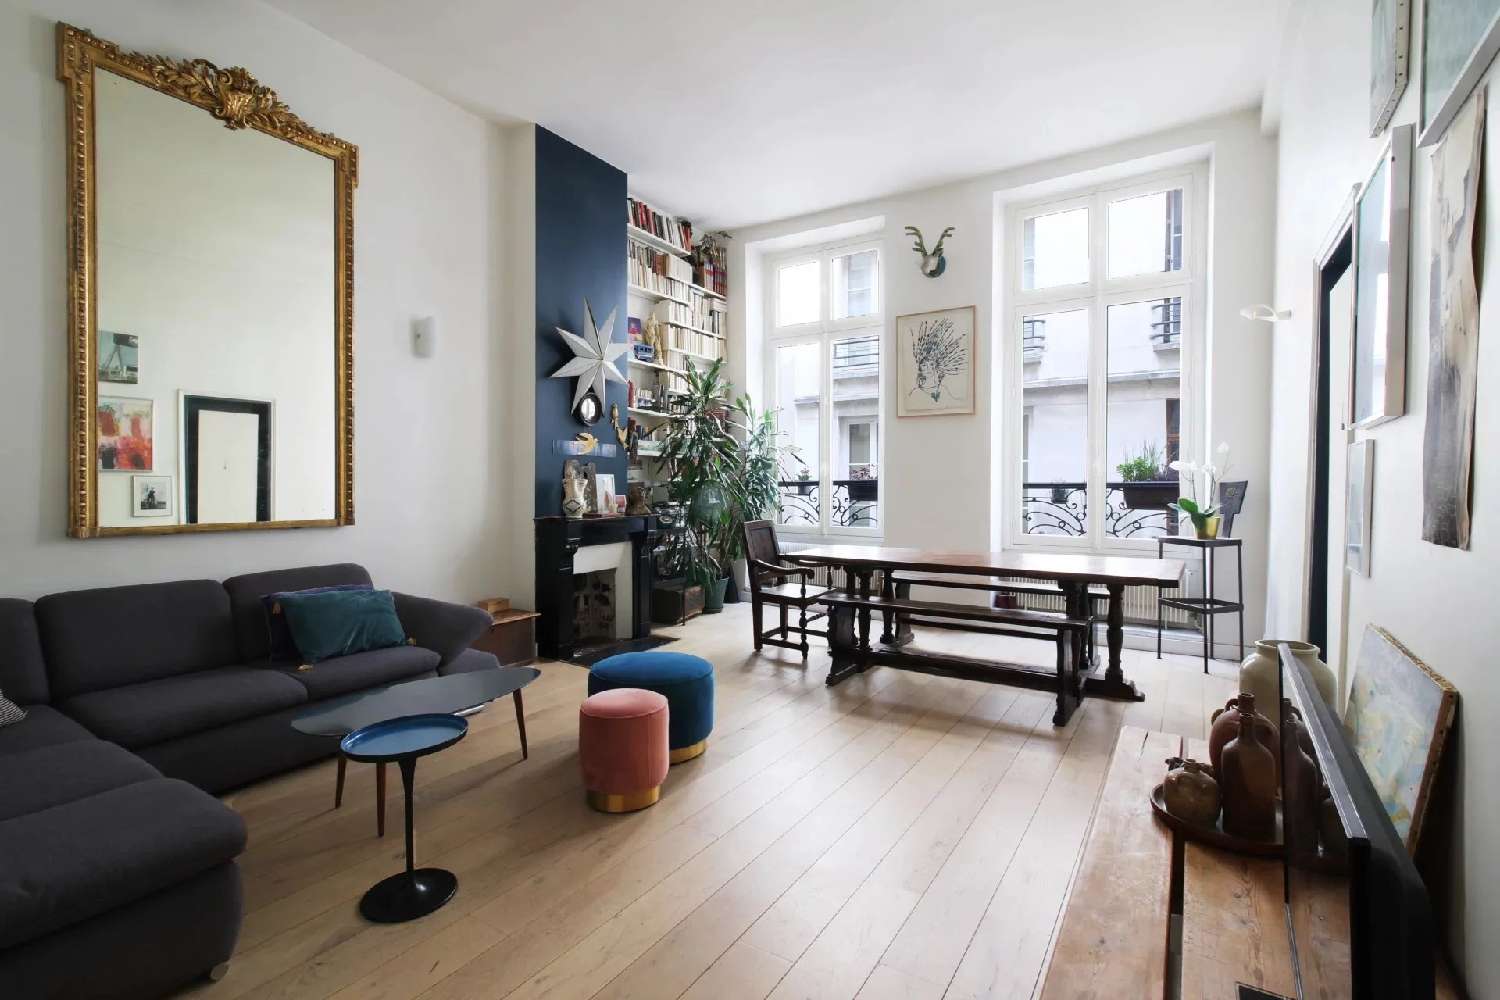  for sale apartment Paris 1er Arrondissement Paris (Seine) 1